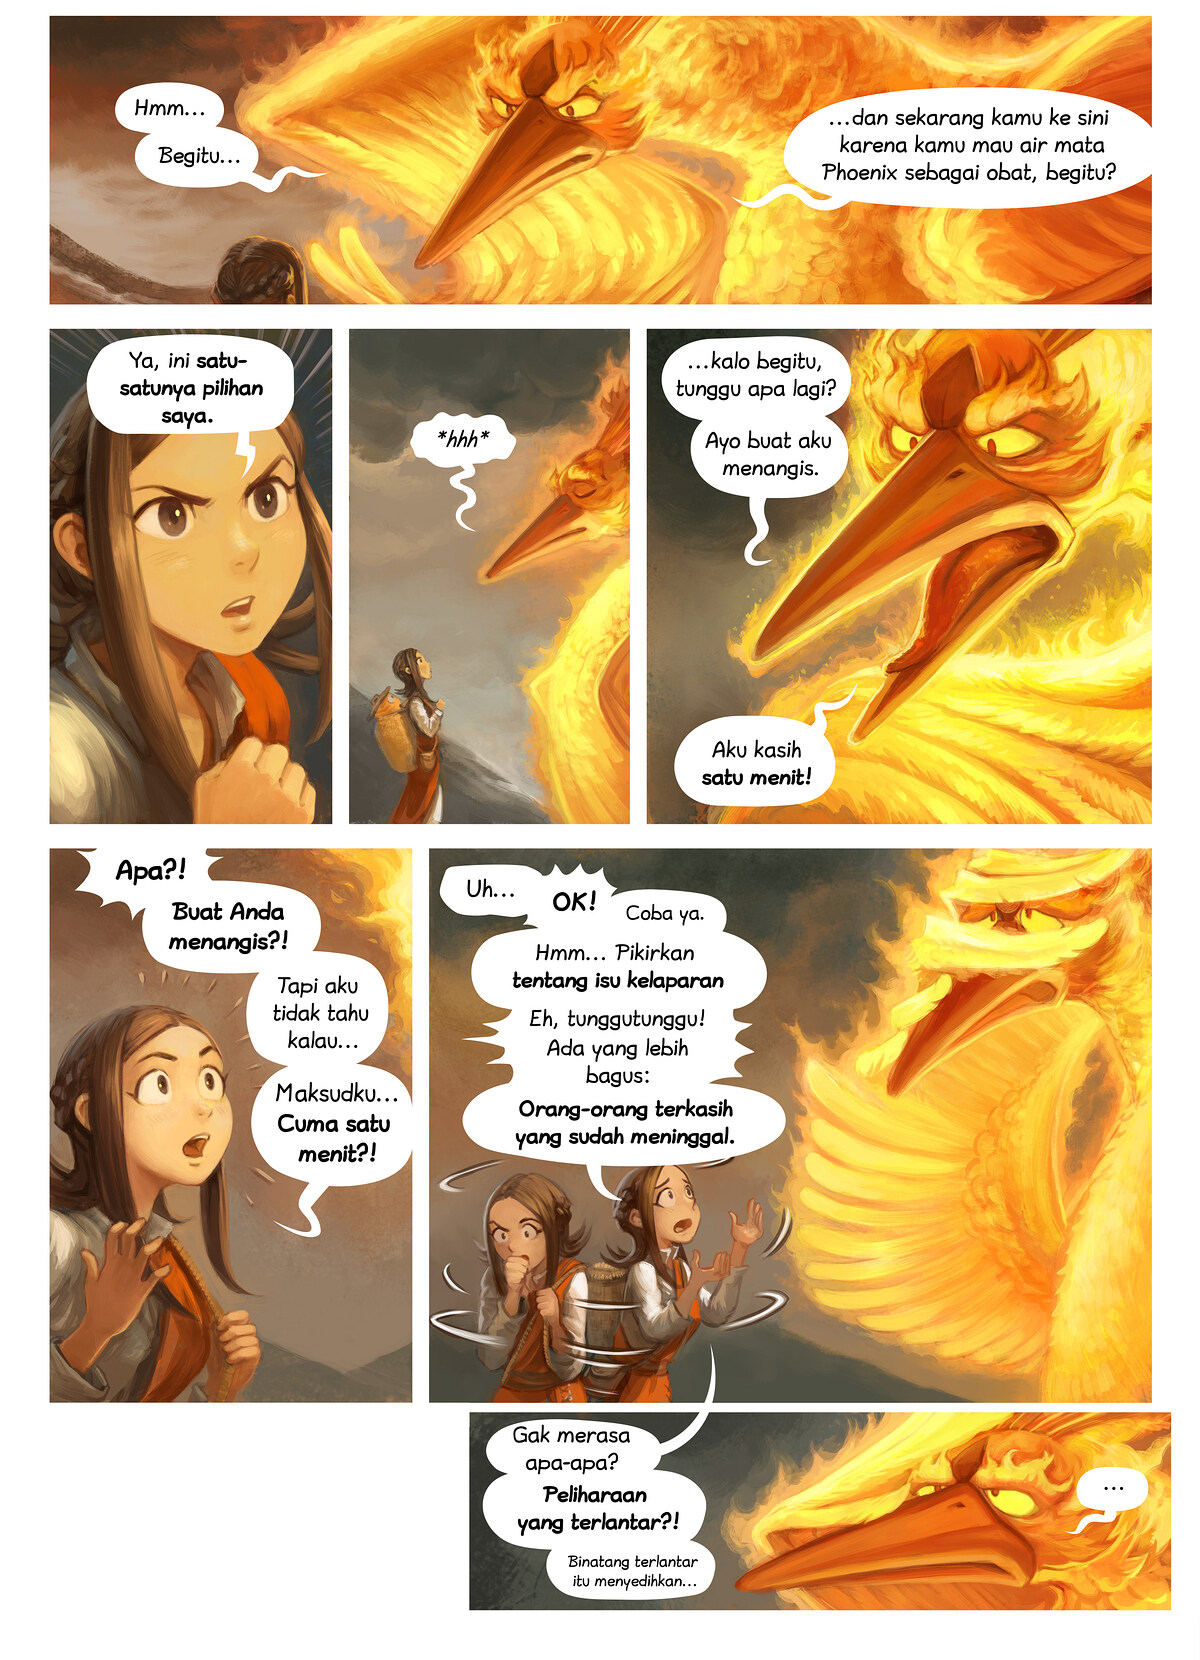 Episode 37: Air Mata Phoenix, Page 5